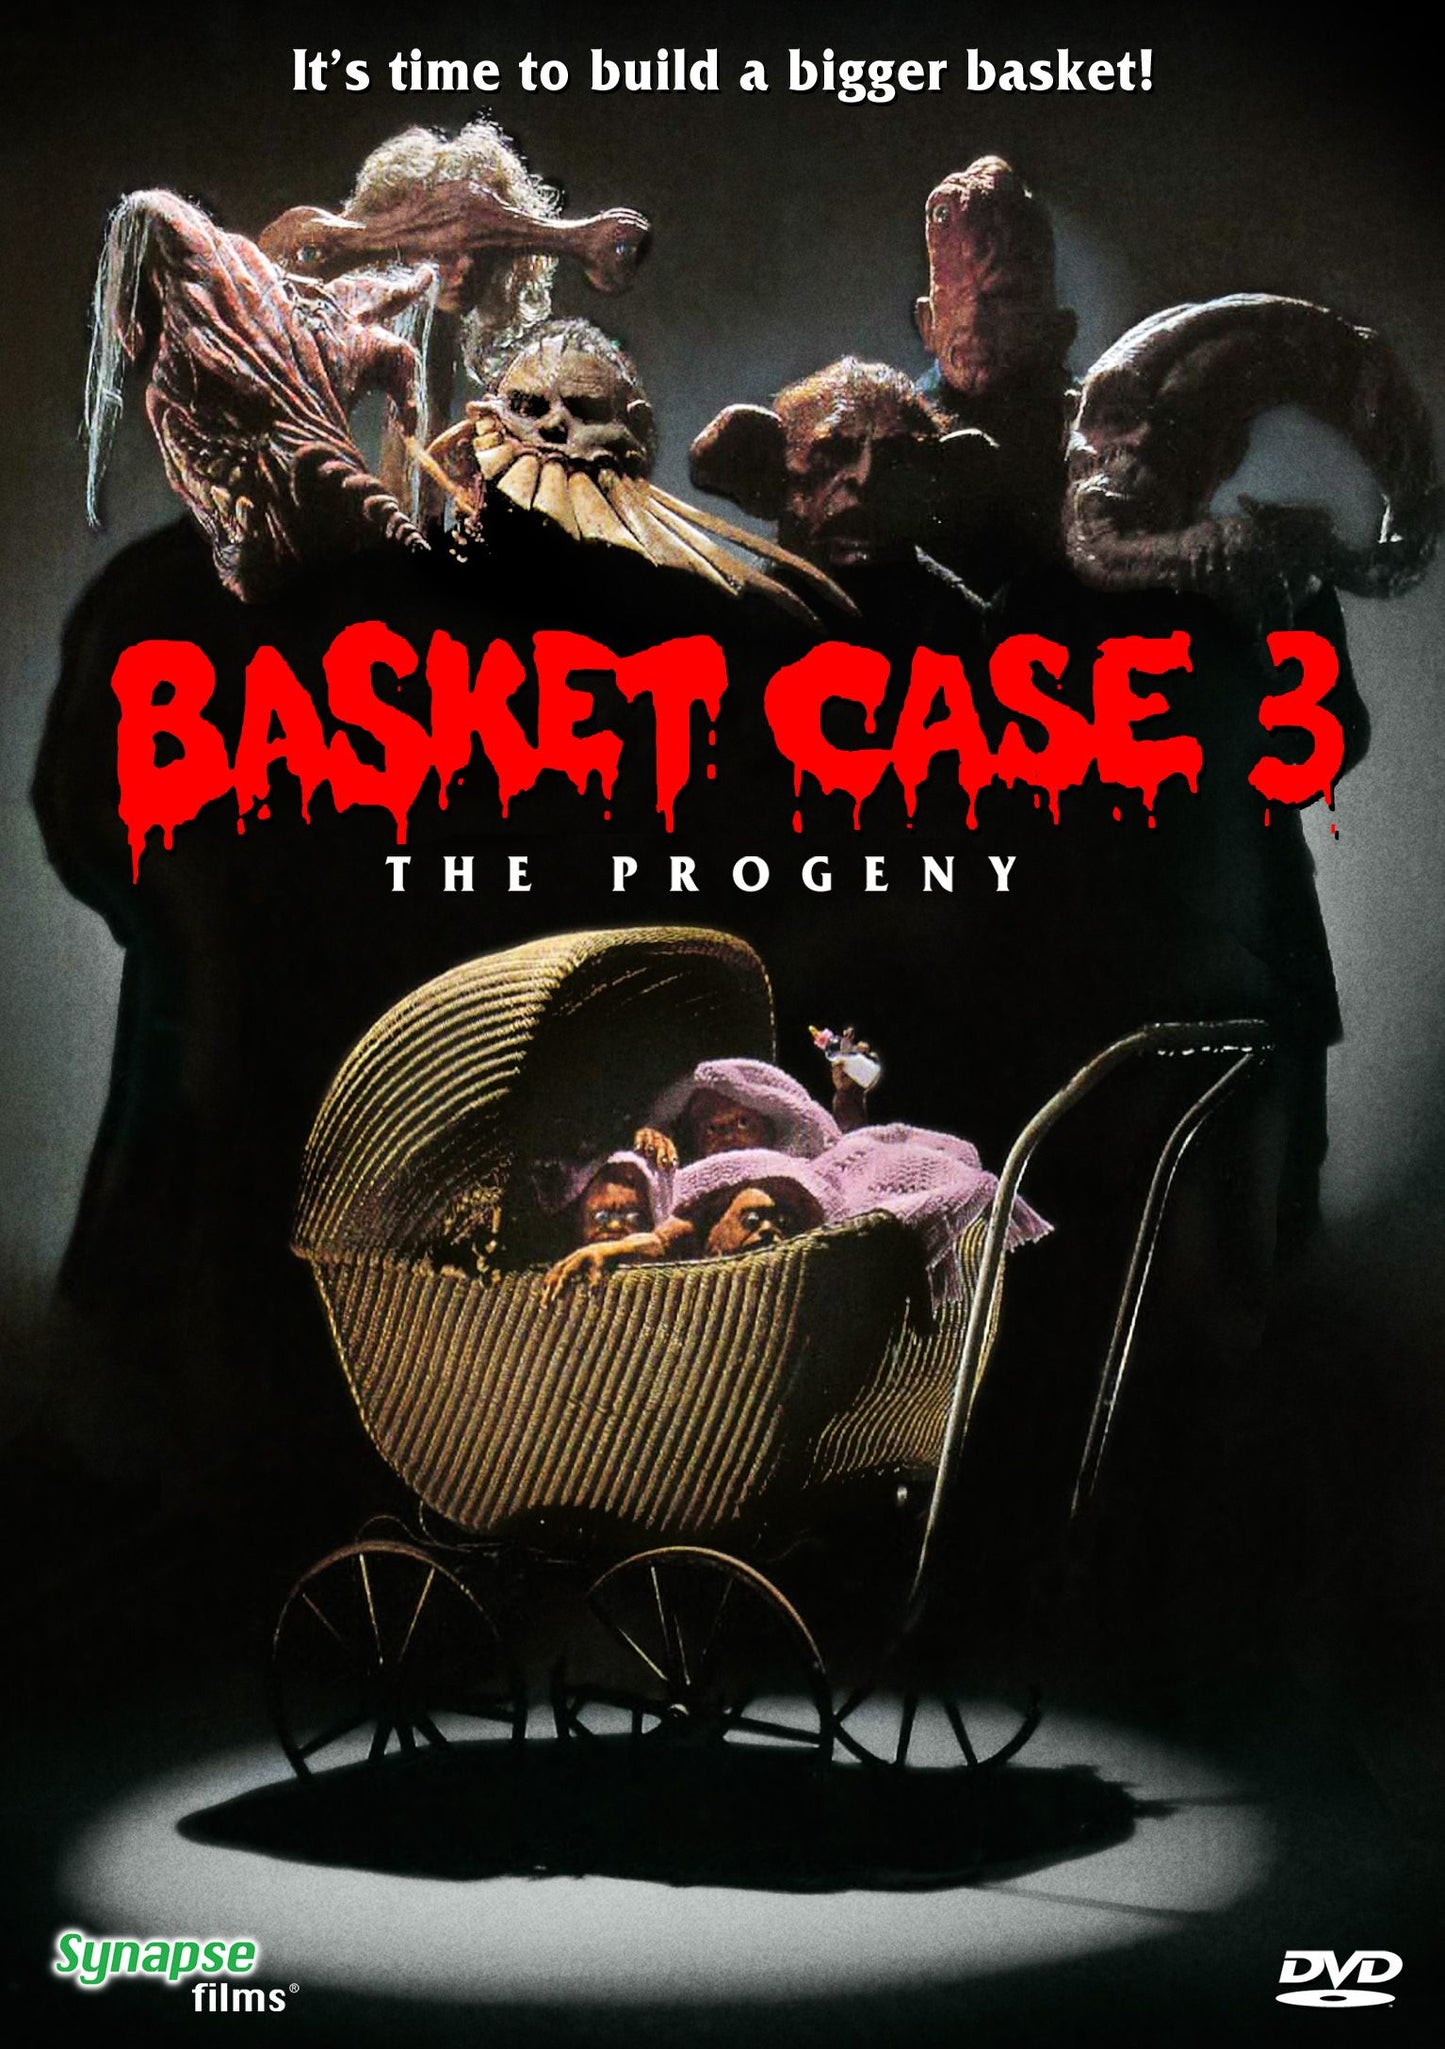 Basket Case 3: The Progeny cover art